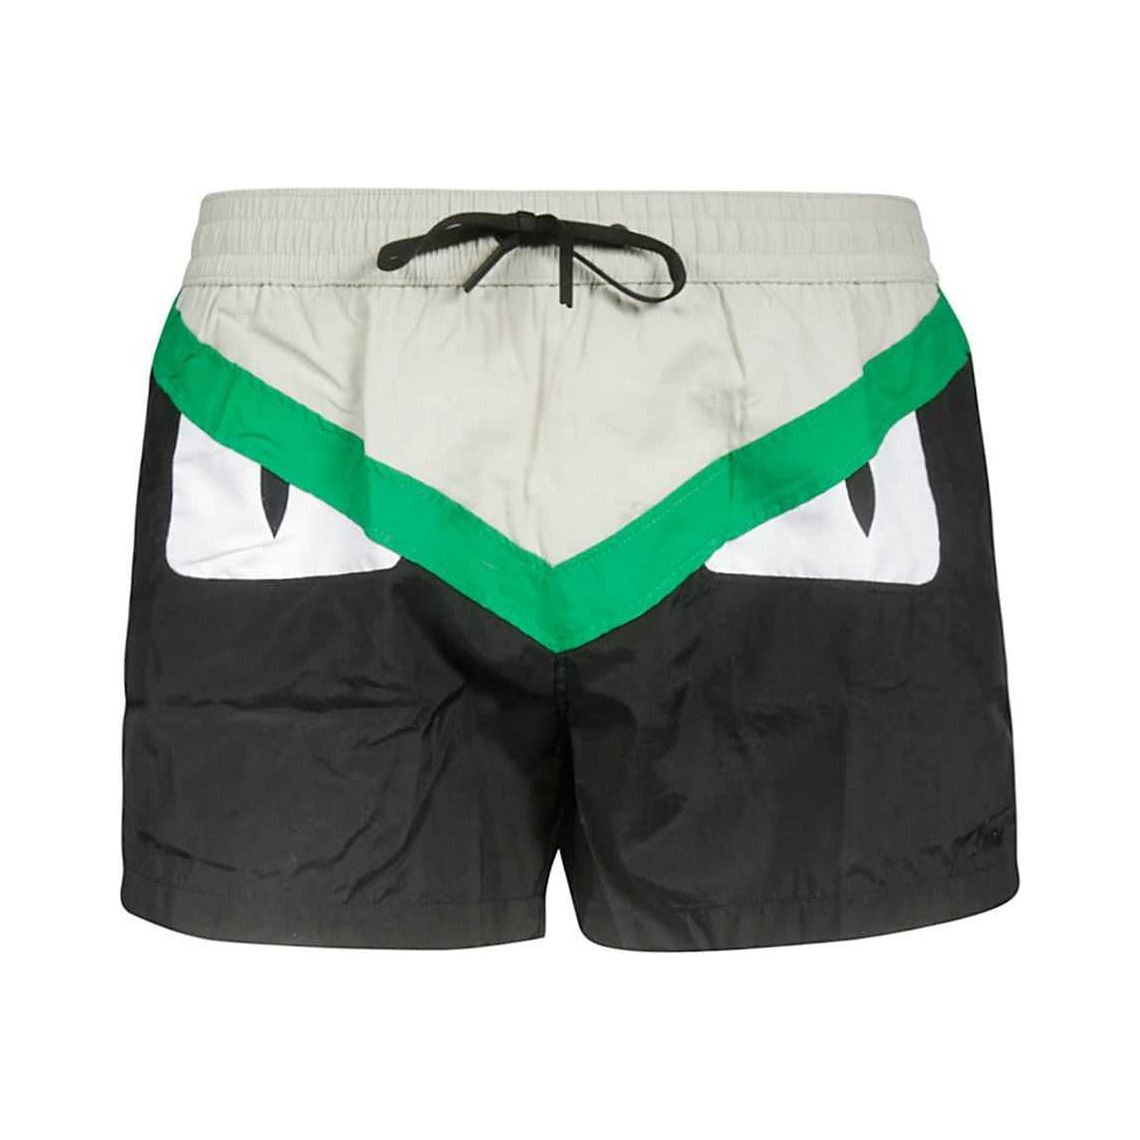 FENDI Bag Bugs swim shorts size 48 IT/M (fits S)